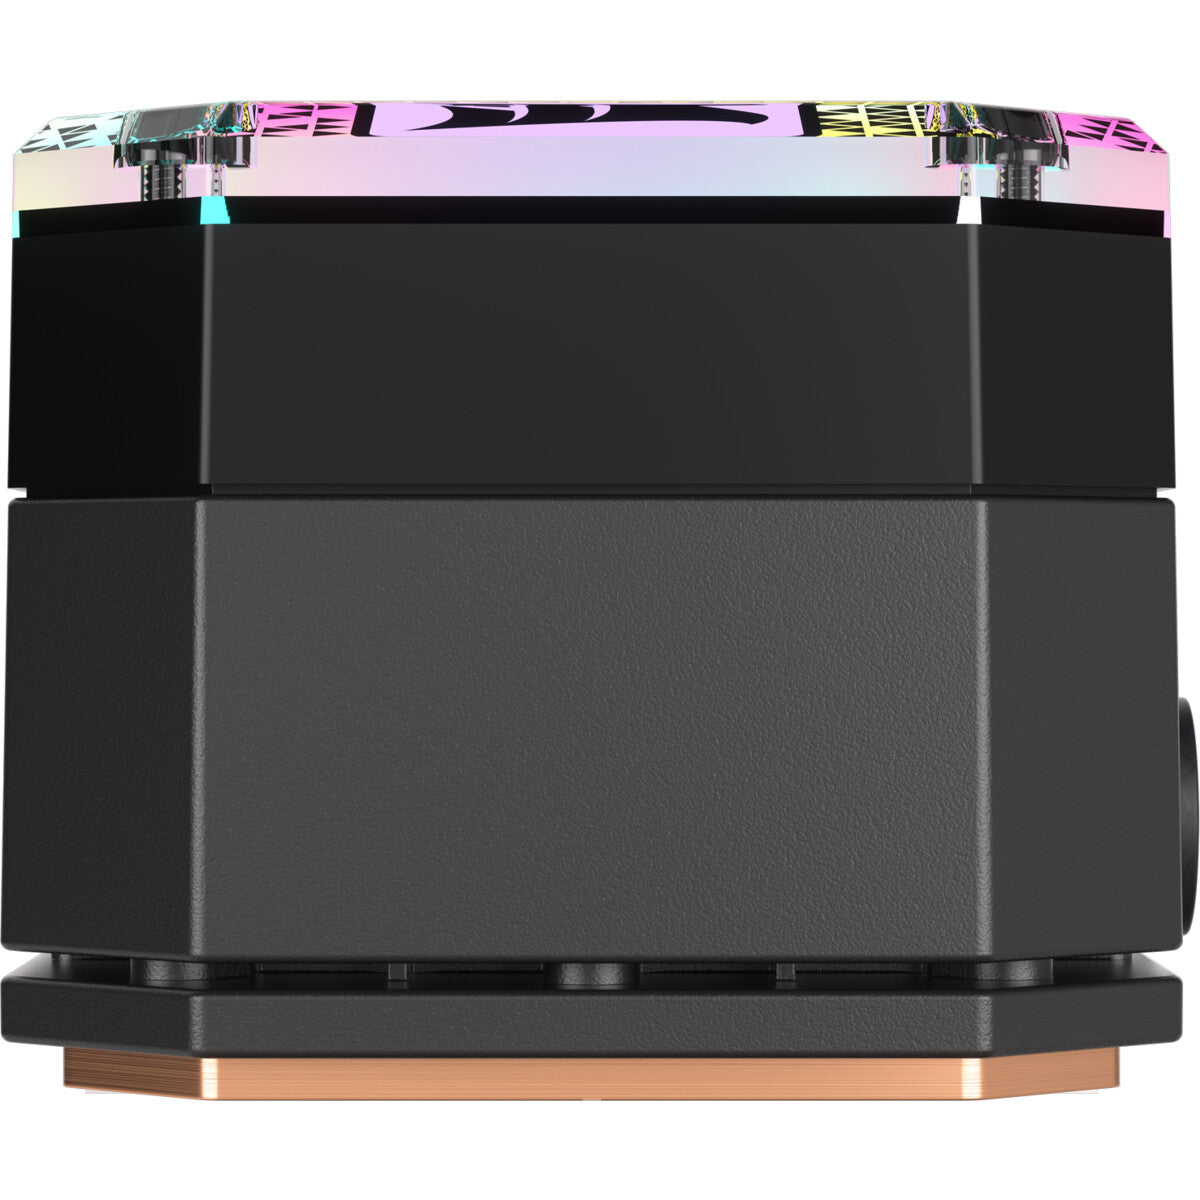 Corsair iCUE H115i ELITE CAPELLIX XT - All-in-one Liquid Processor Cooler in Black - 280mm